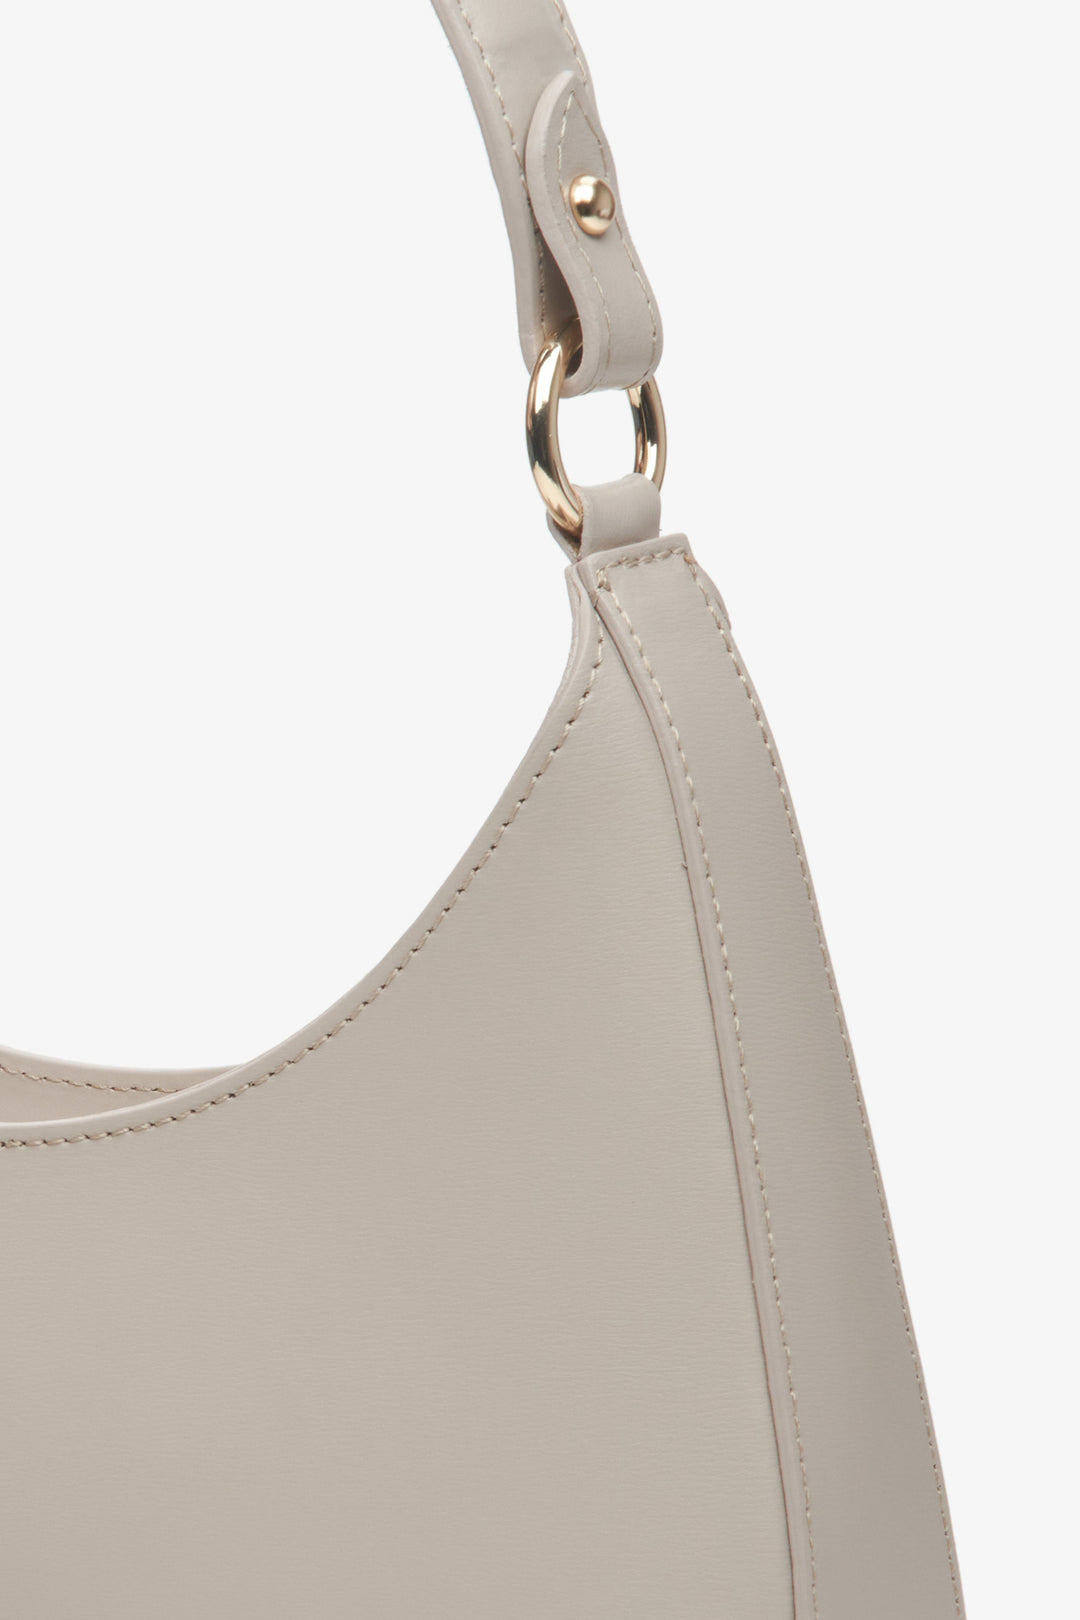 Women's Italian genuine leather shoulder bag in beige and grey.